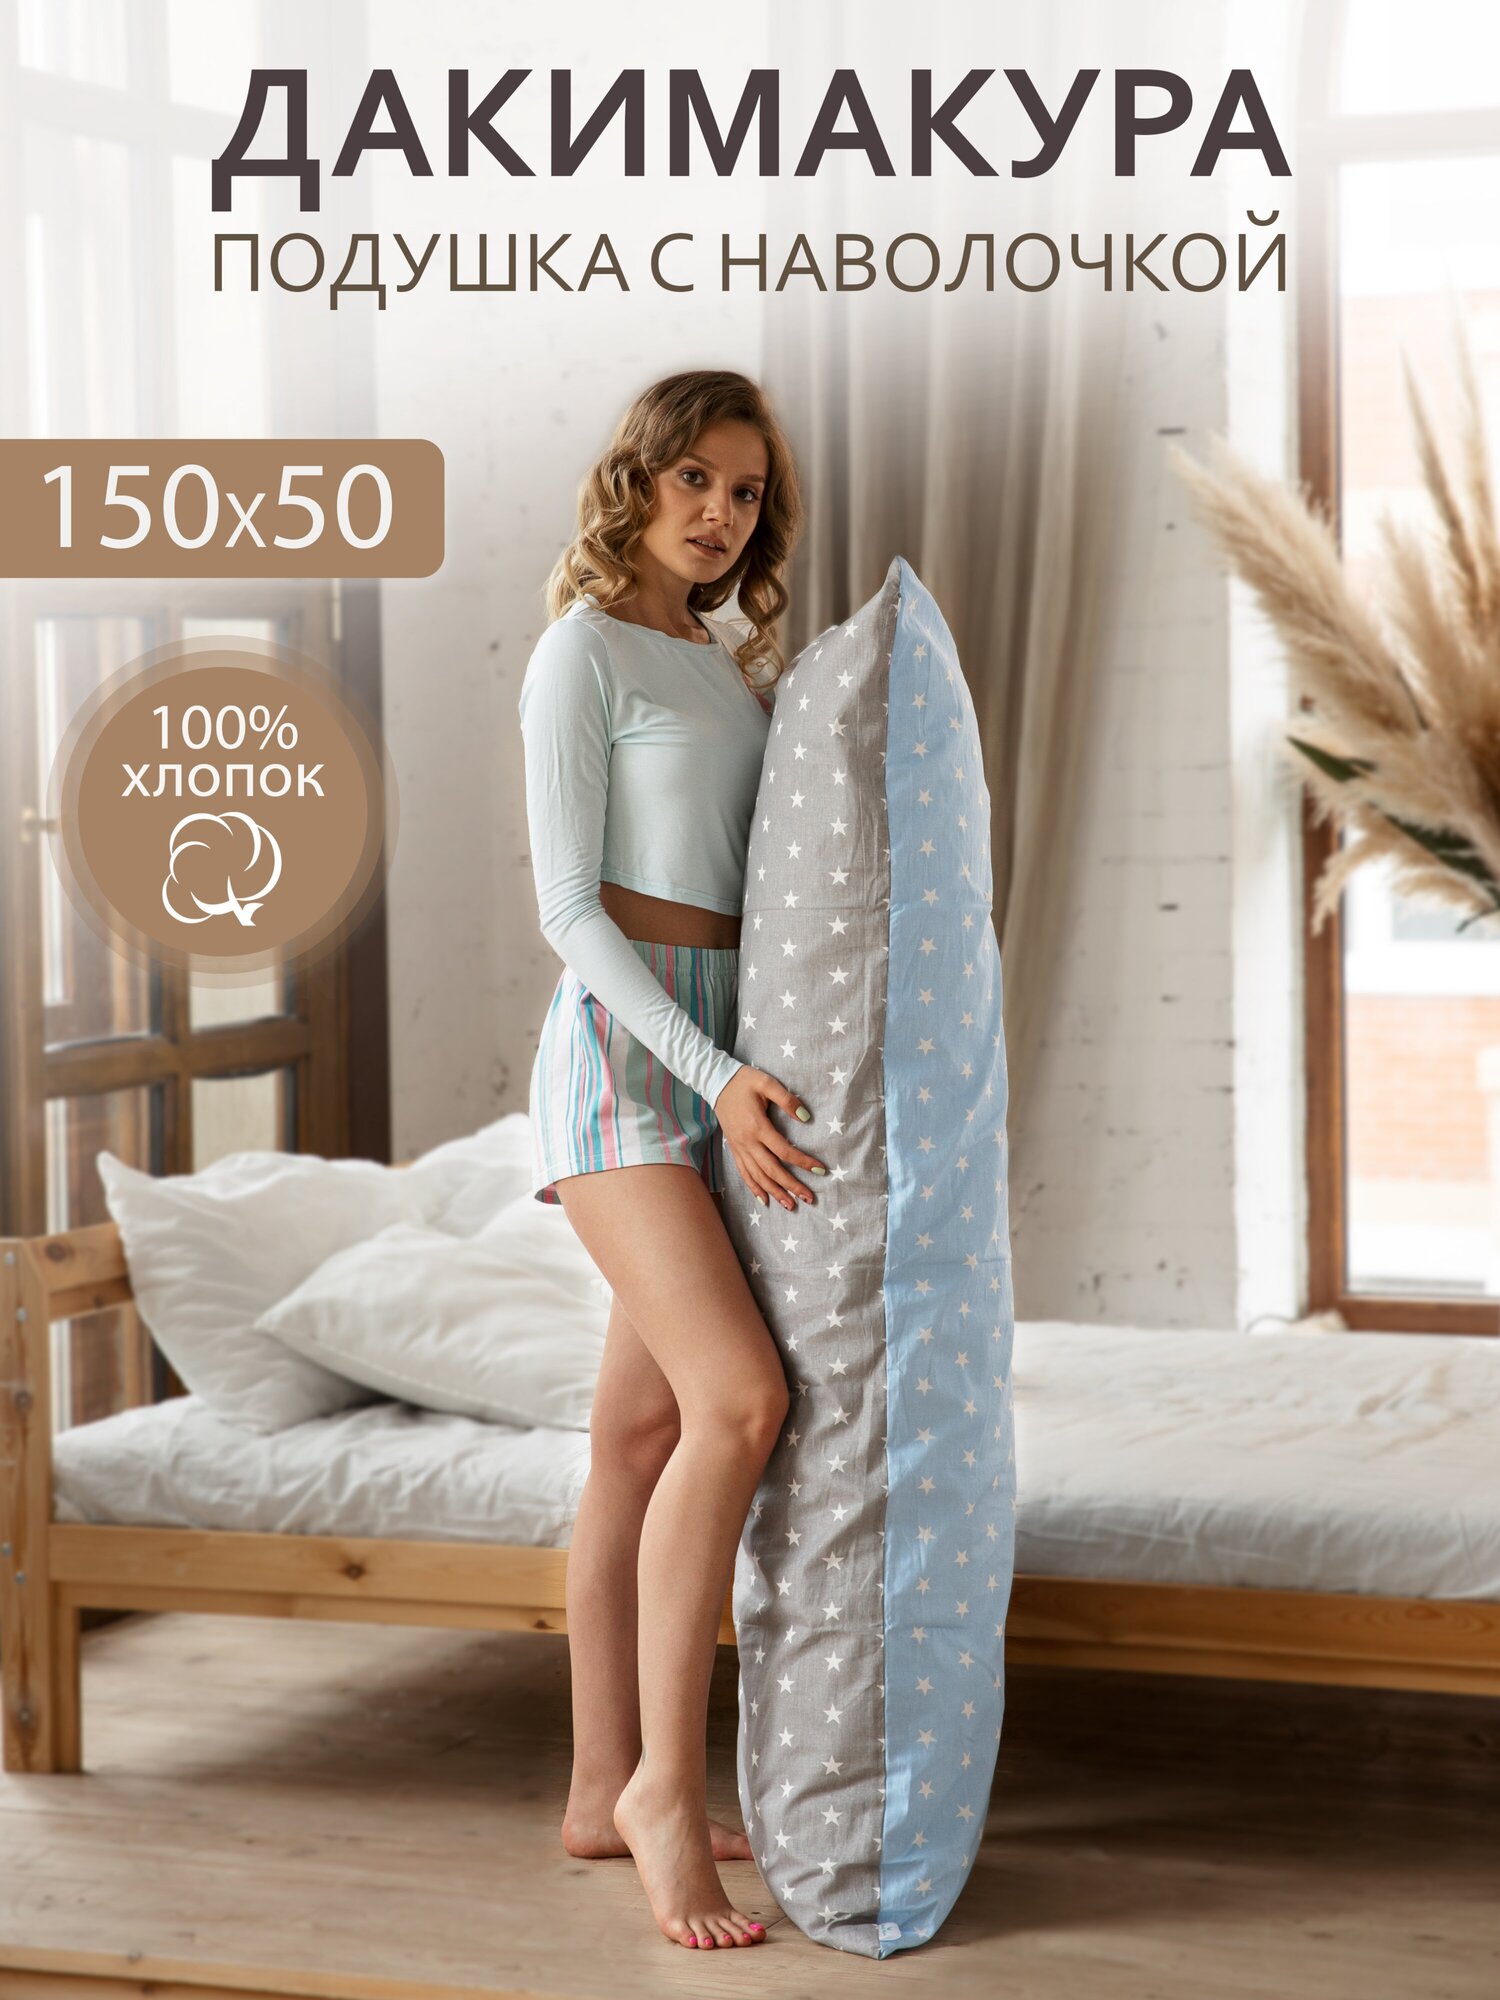 Body Pillow Подушка для сна 150х50 см / Дакимакура / со съёмной наволочкой "Звезды серый-голубой" - фотография № 1